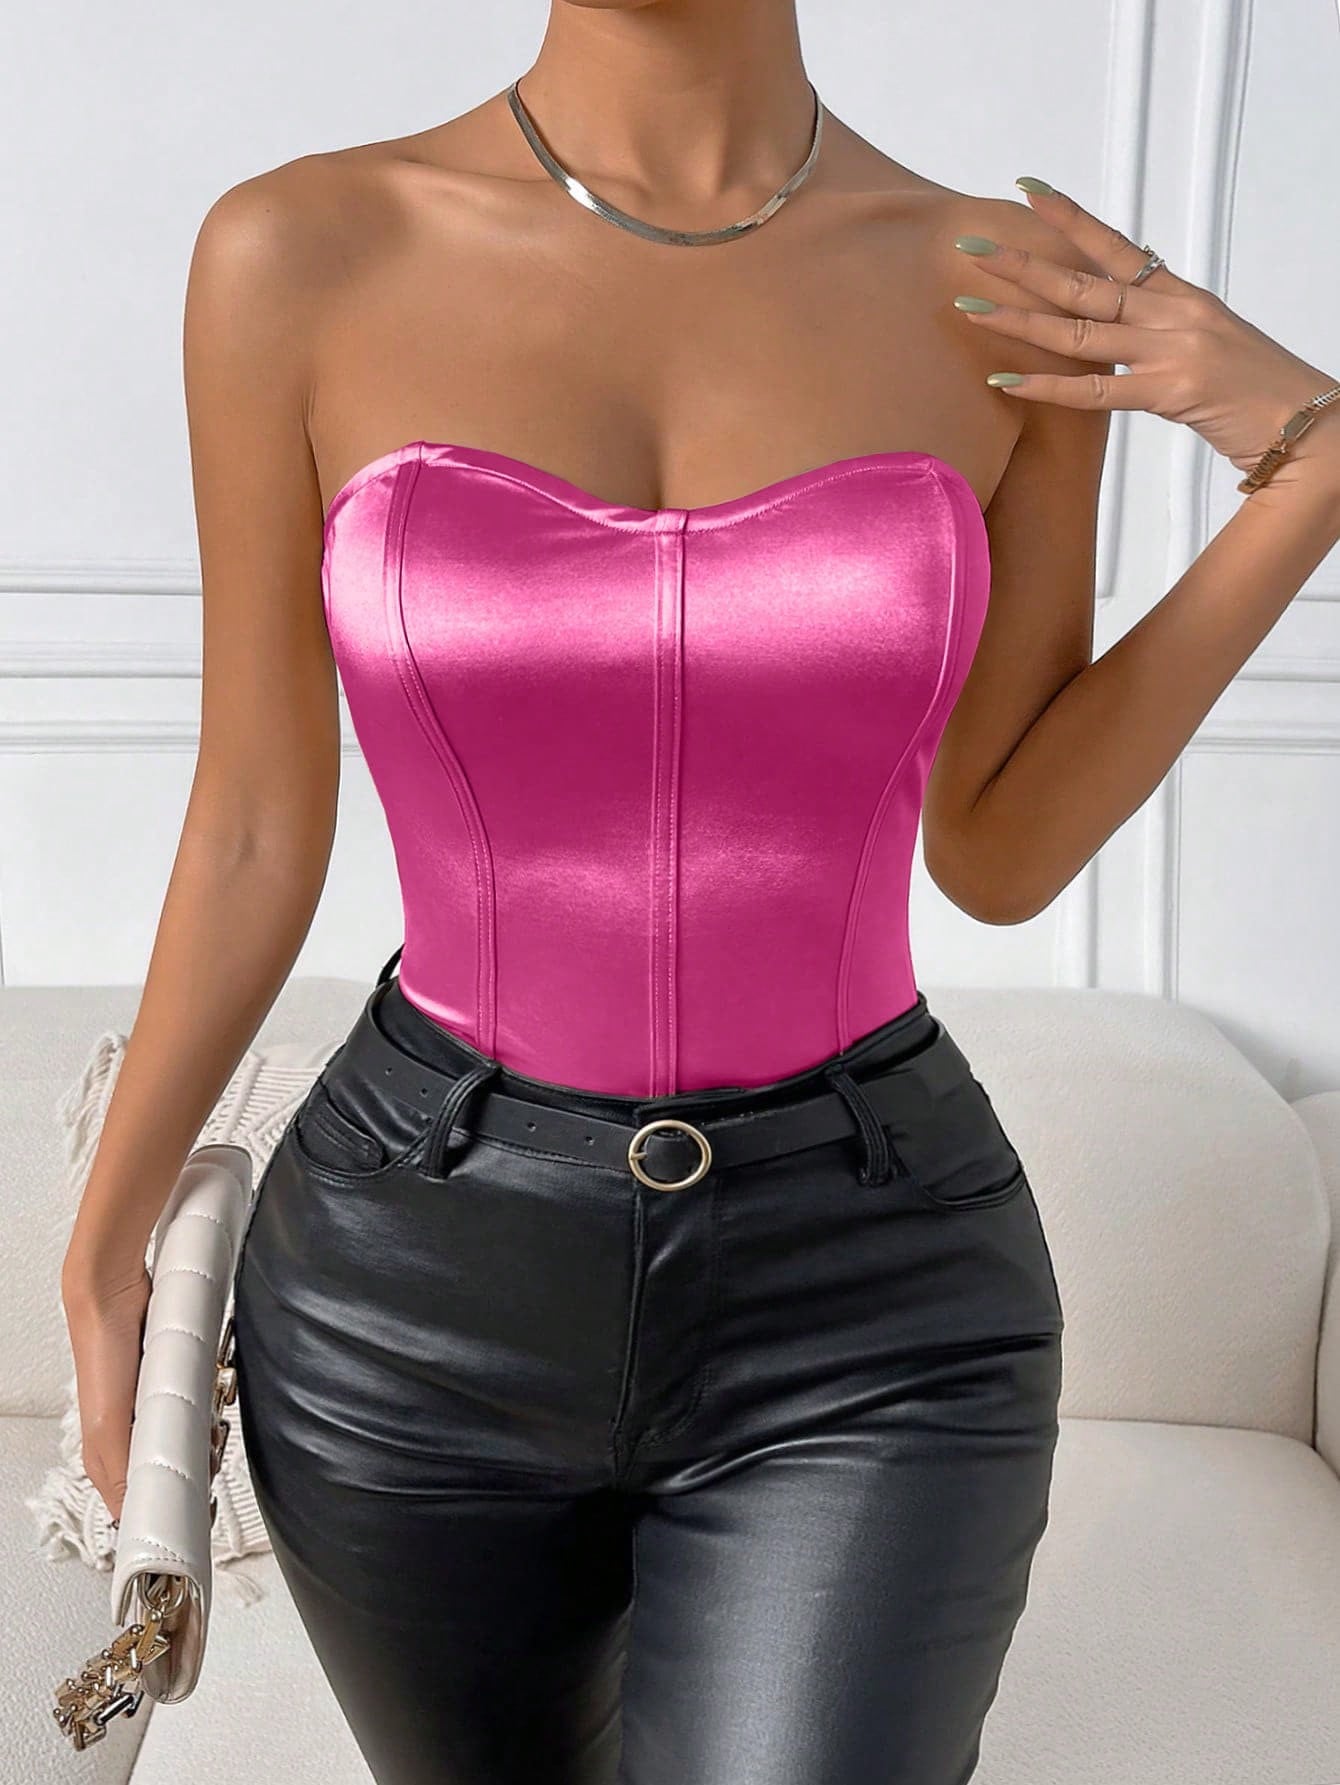 Hot pink metallic bodysuit on models